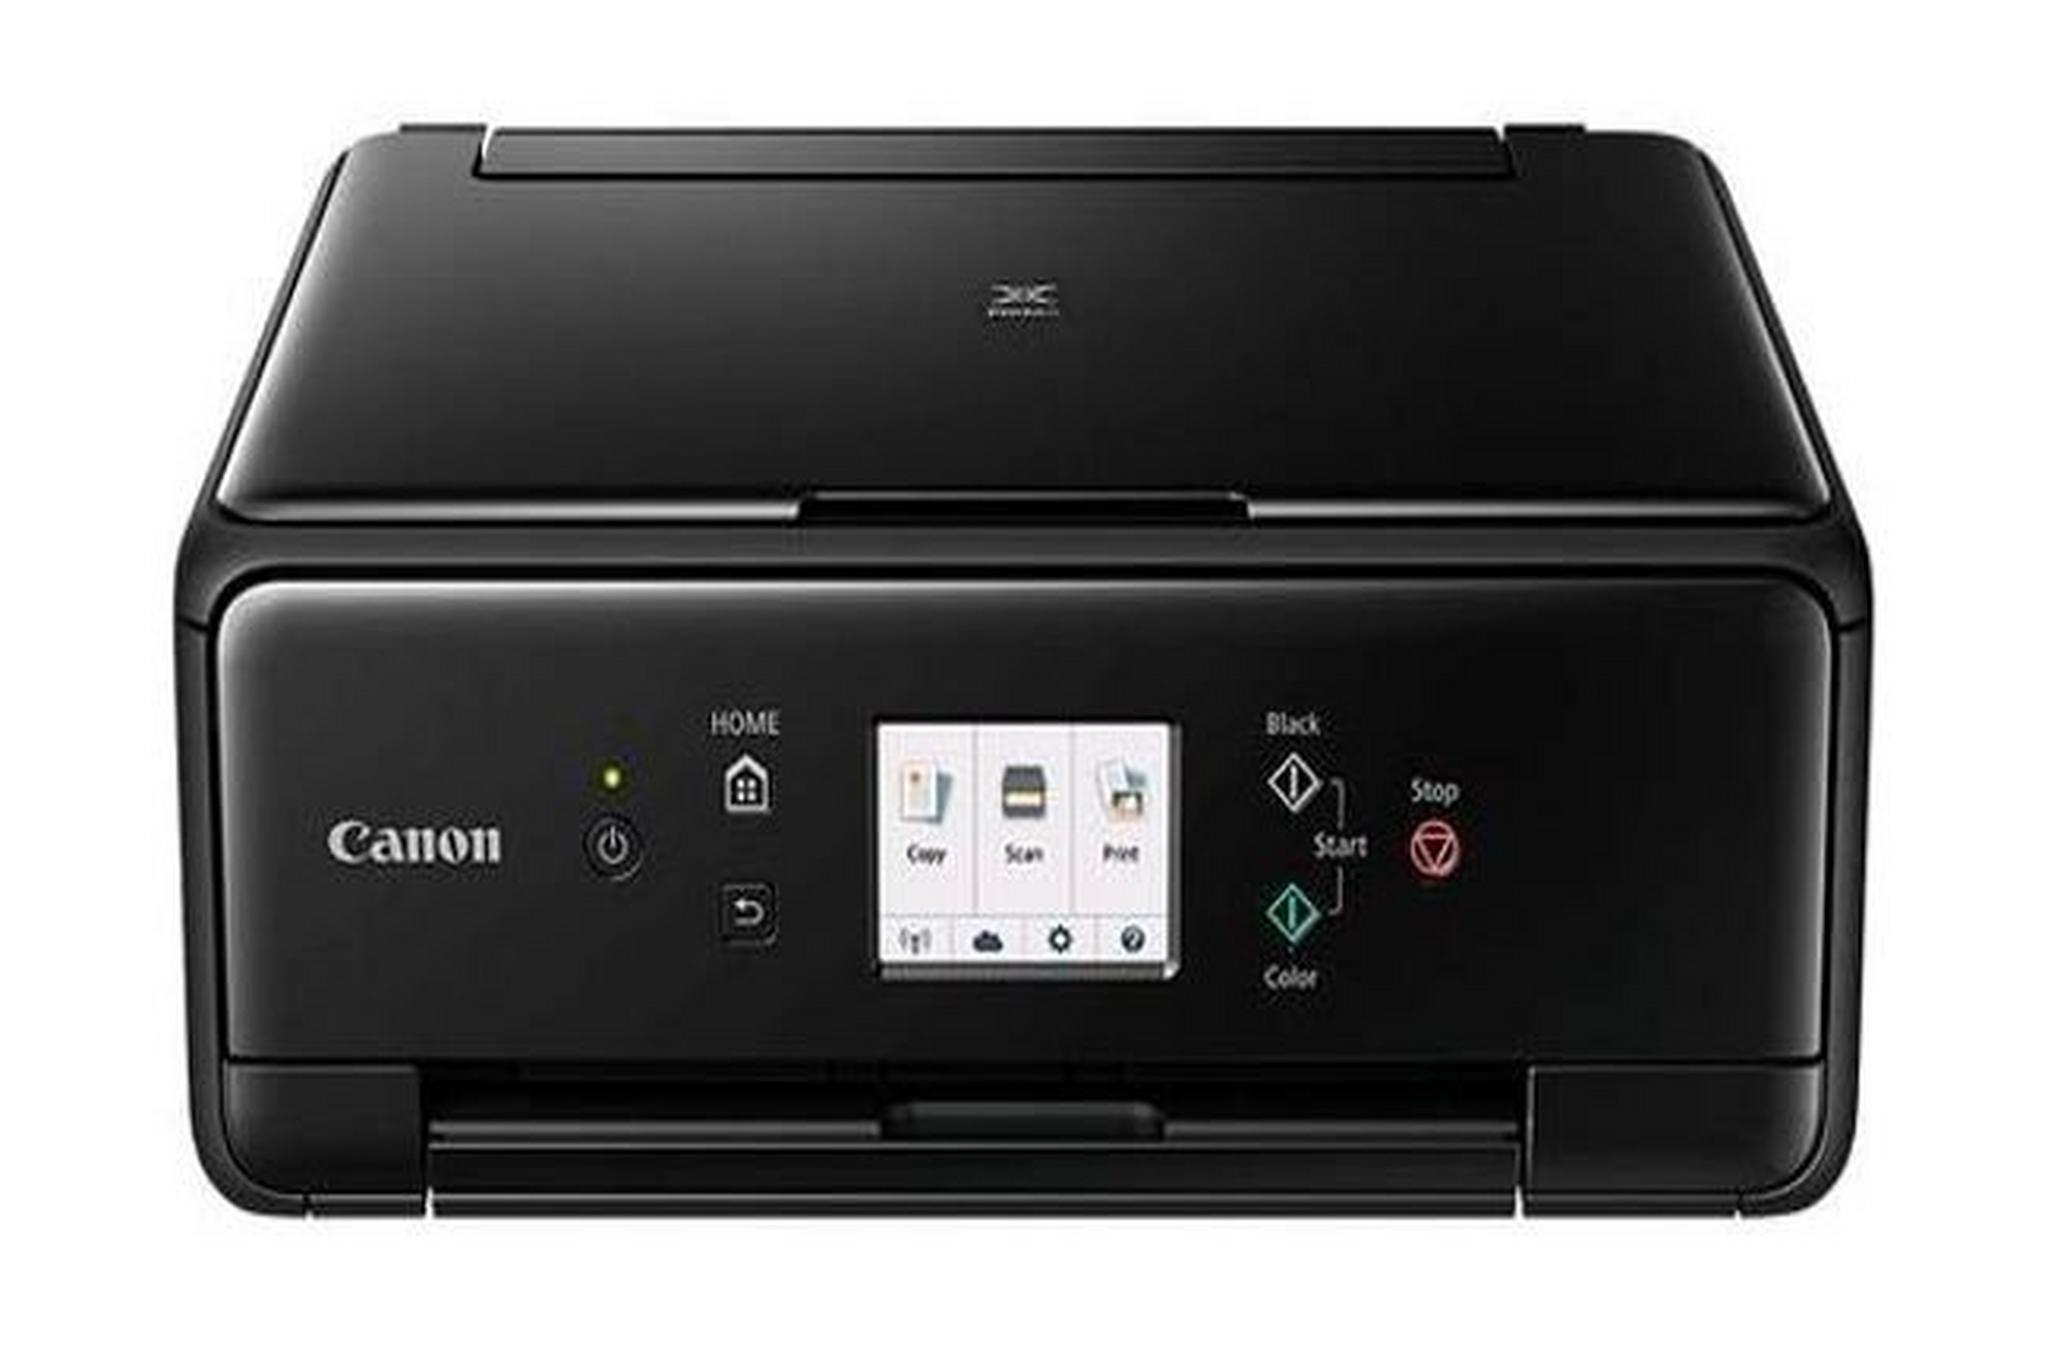 Canon Pixma TS5140 3-in-1 Wireless Deskjet Printer